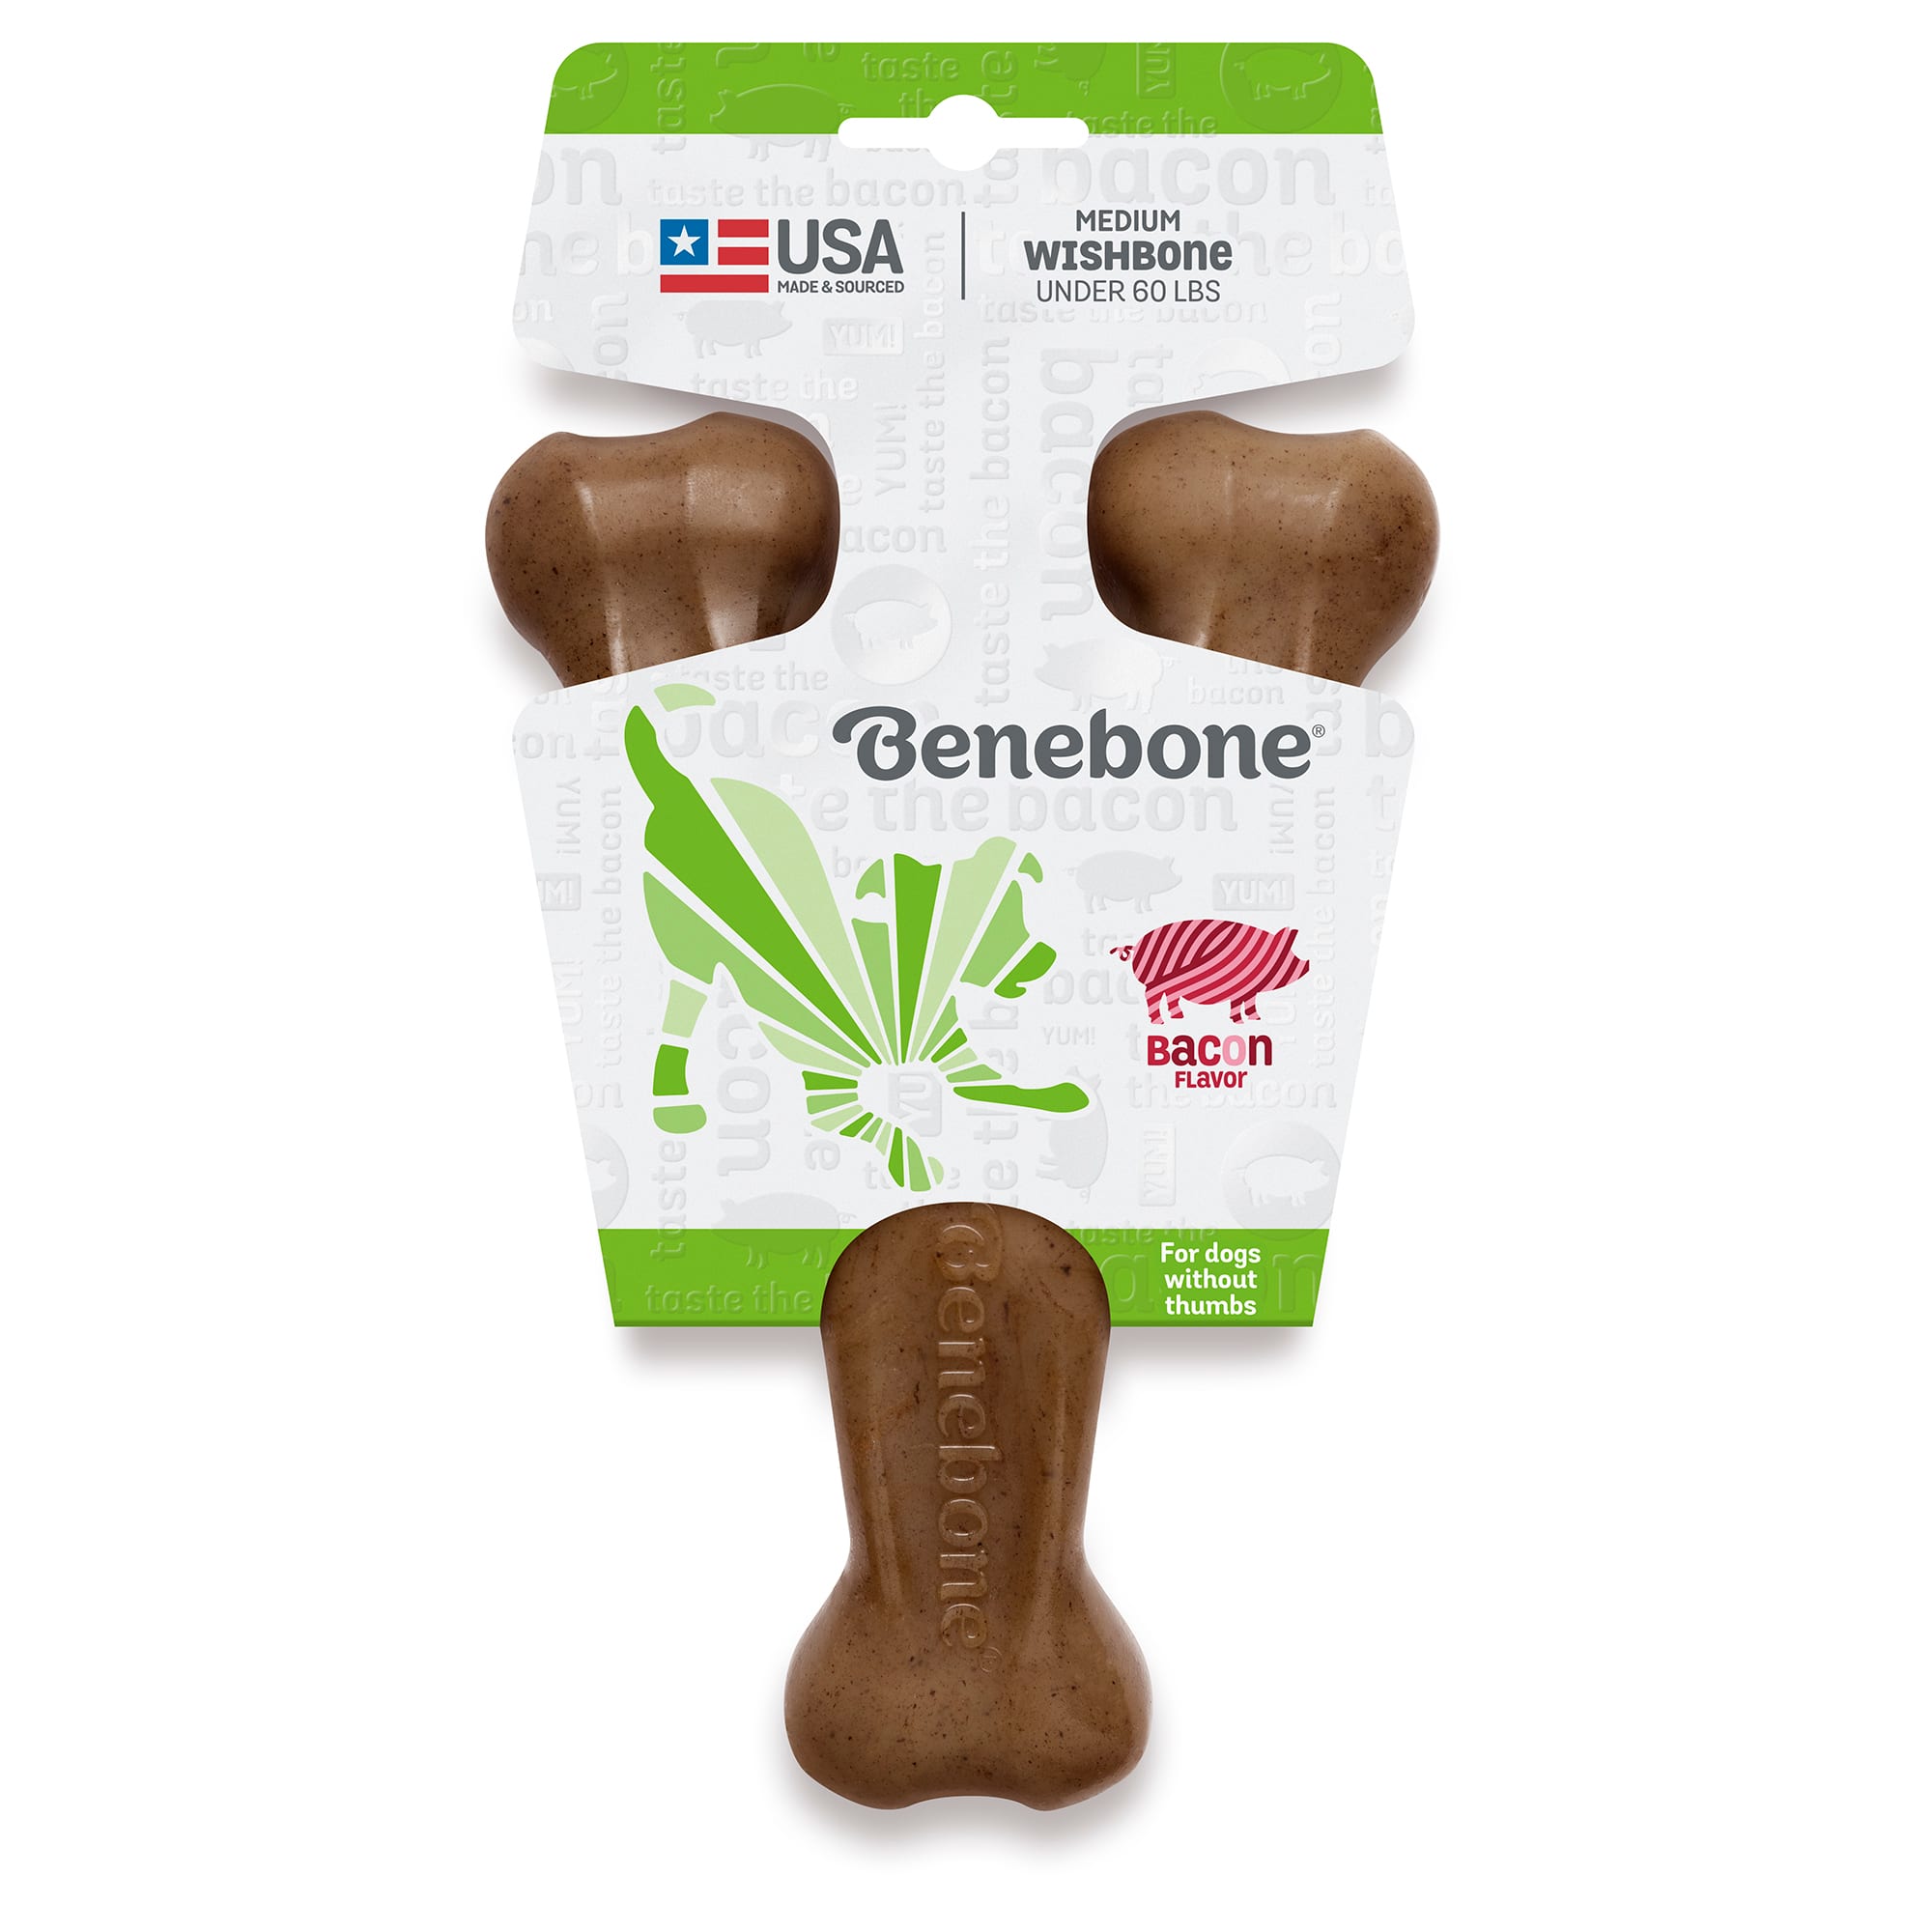 Photos - Dog Toy Benebone Bacon Flavored Wishbone Chew Toy, Medium, Brown 808600 